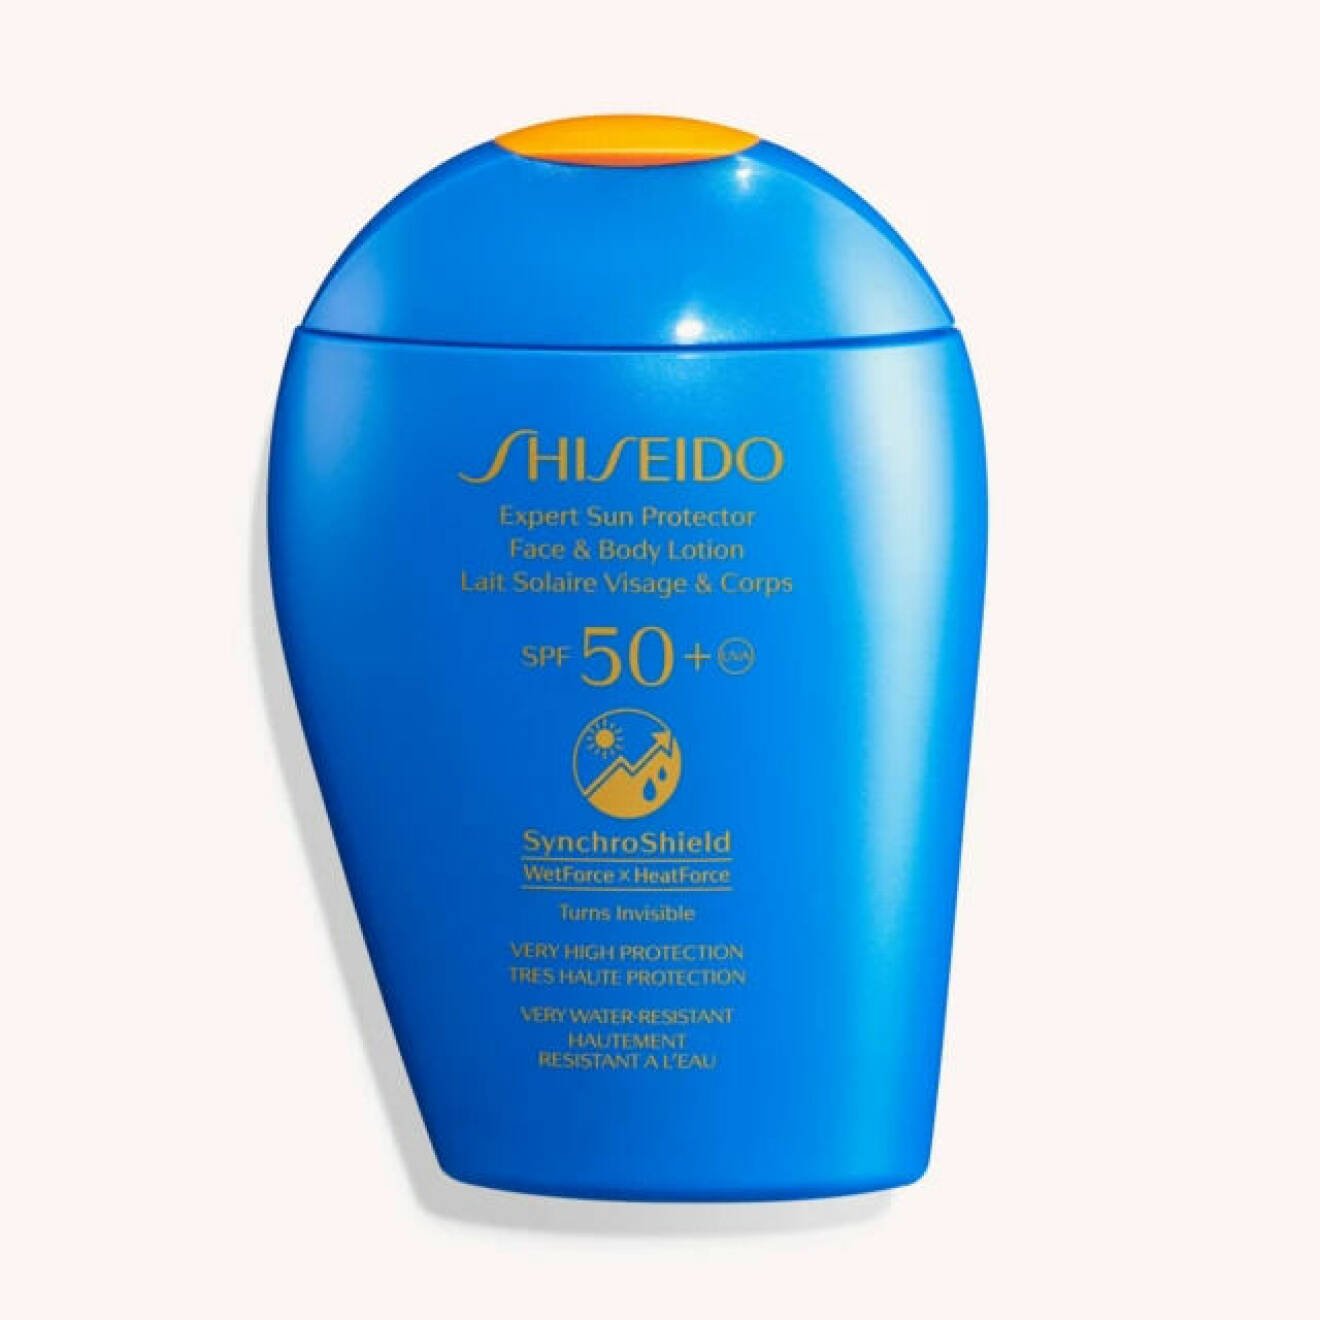 Shiseido ultimate sun protector sunscreen